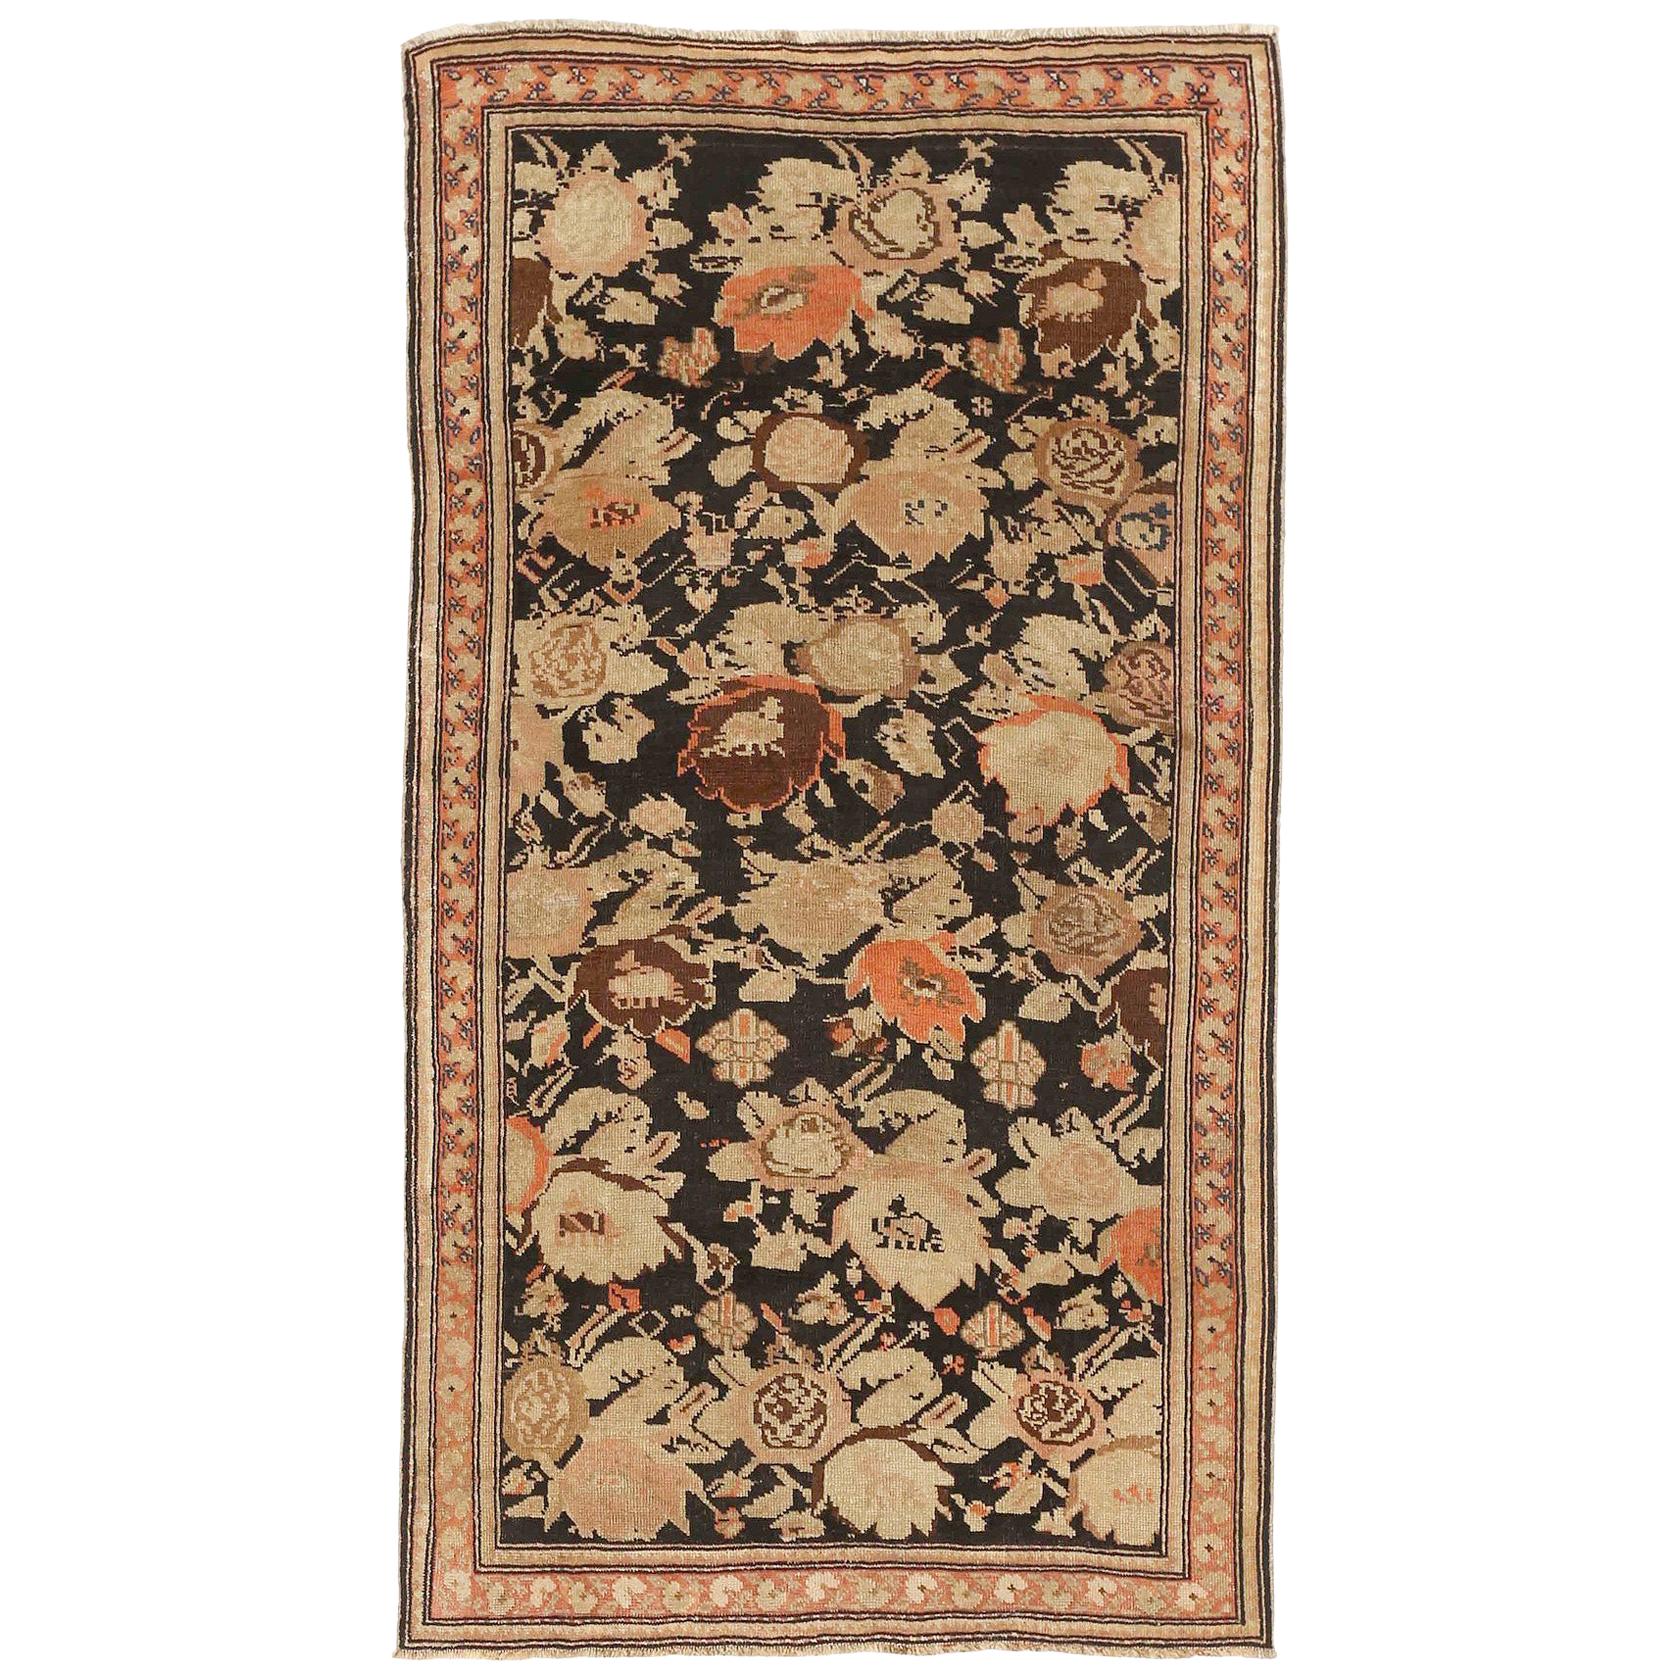 Antique Persian Karabagh Rug with Brown & Beige Floral Motifs